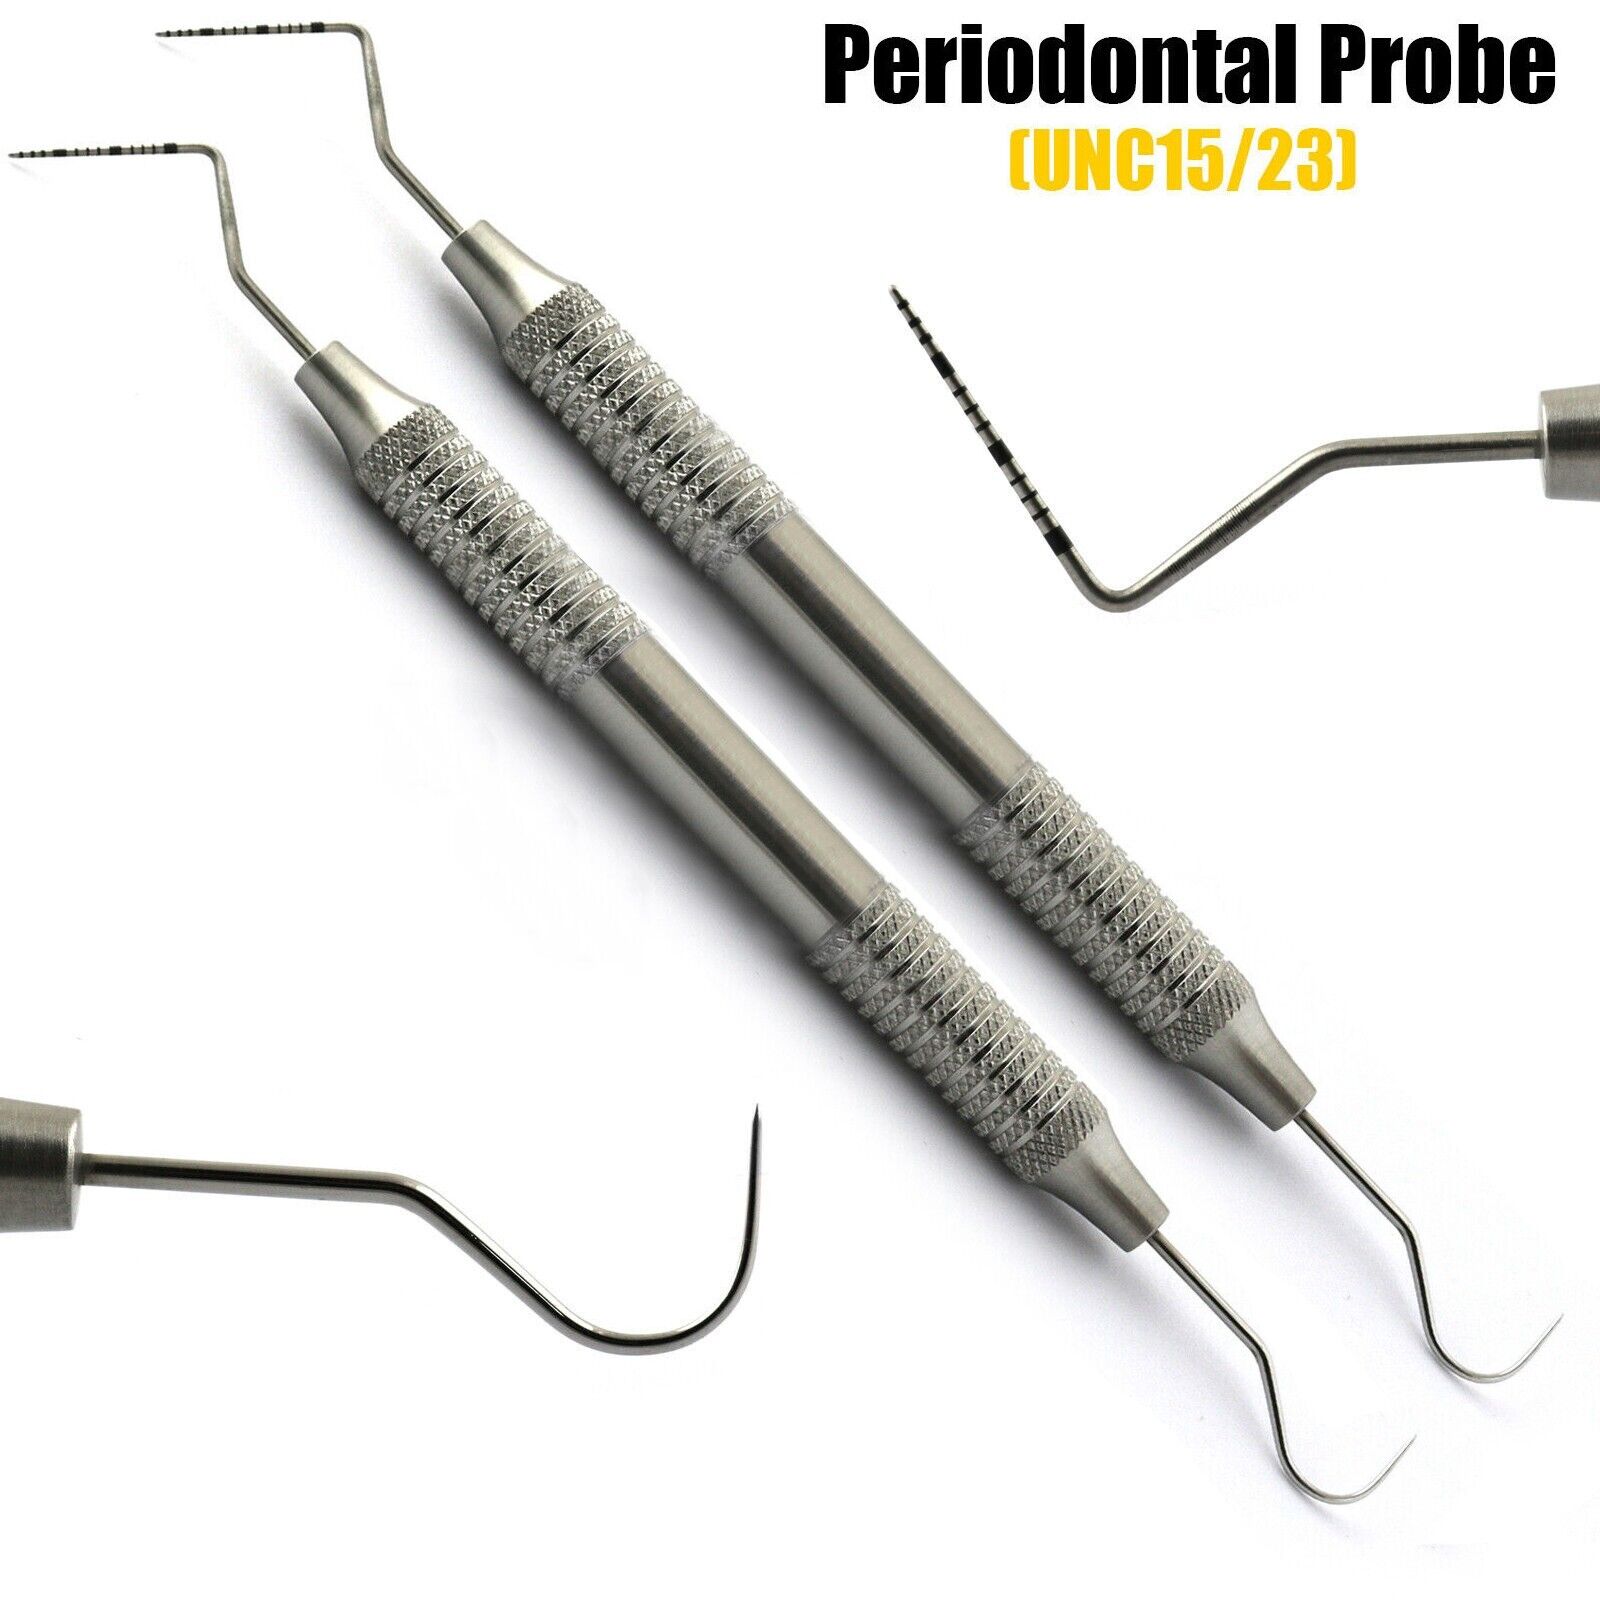 2 Pcs Dental Periodontal Explorer Probe UNC15/23 Color Coded Hollow Handle